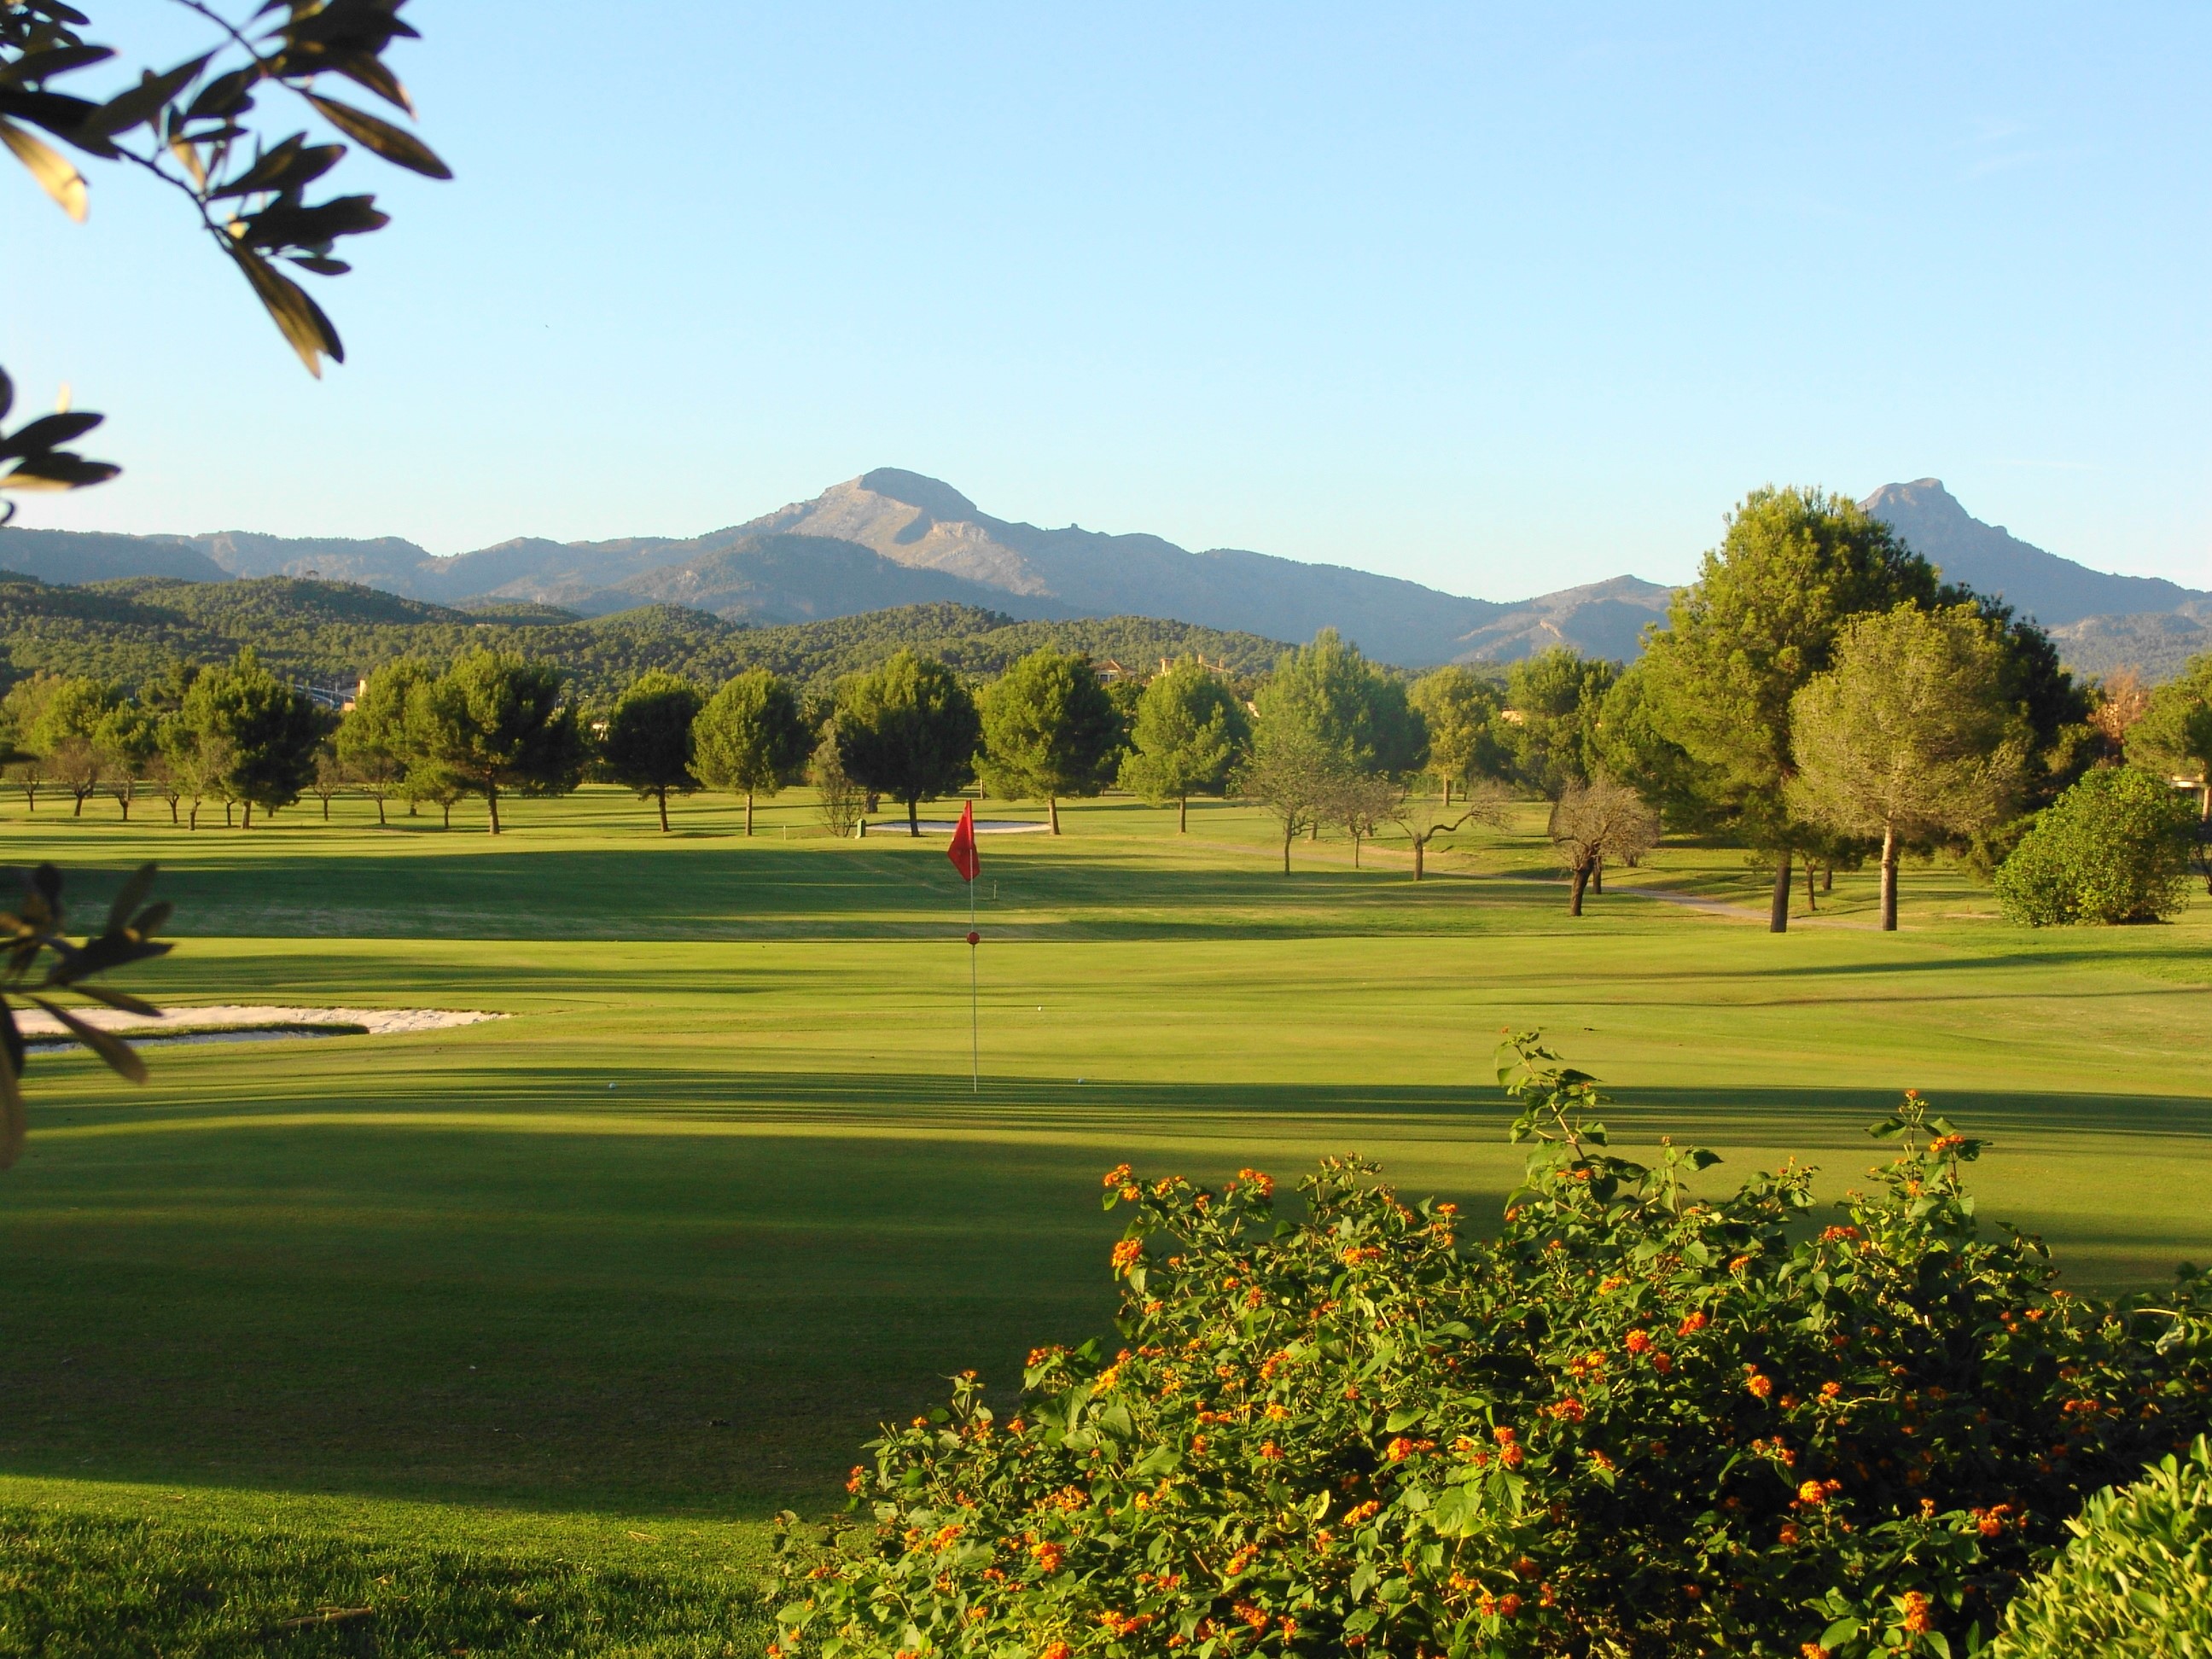 Illeslex participa en la vuelta del European Tour Golf a Mallorca...